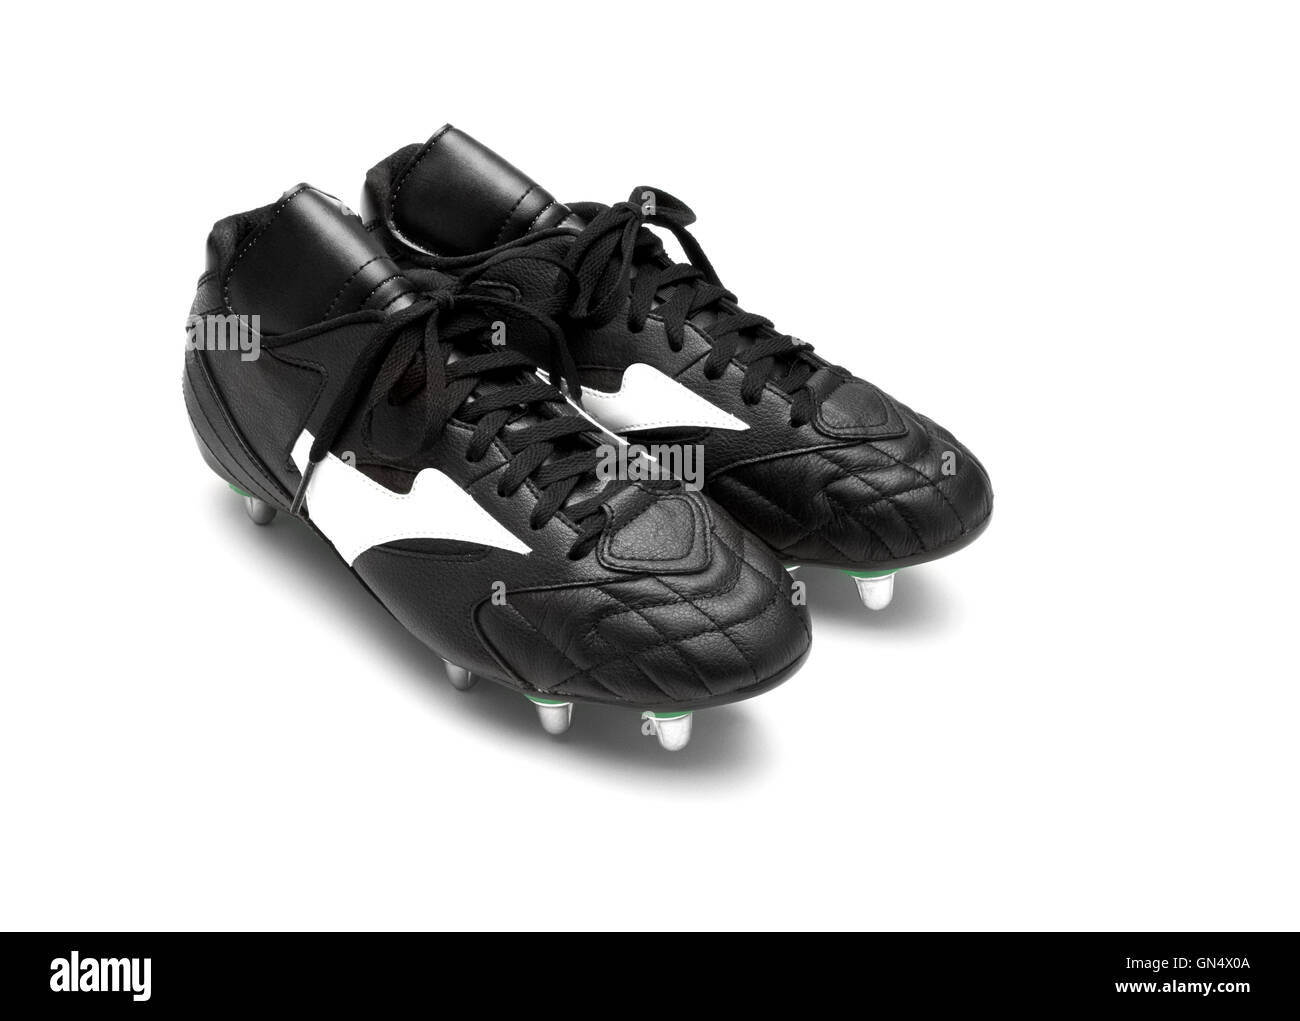 c8 football boots